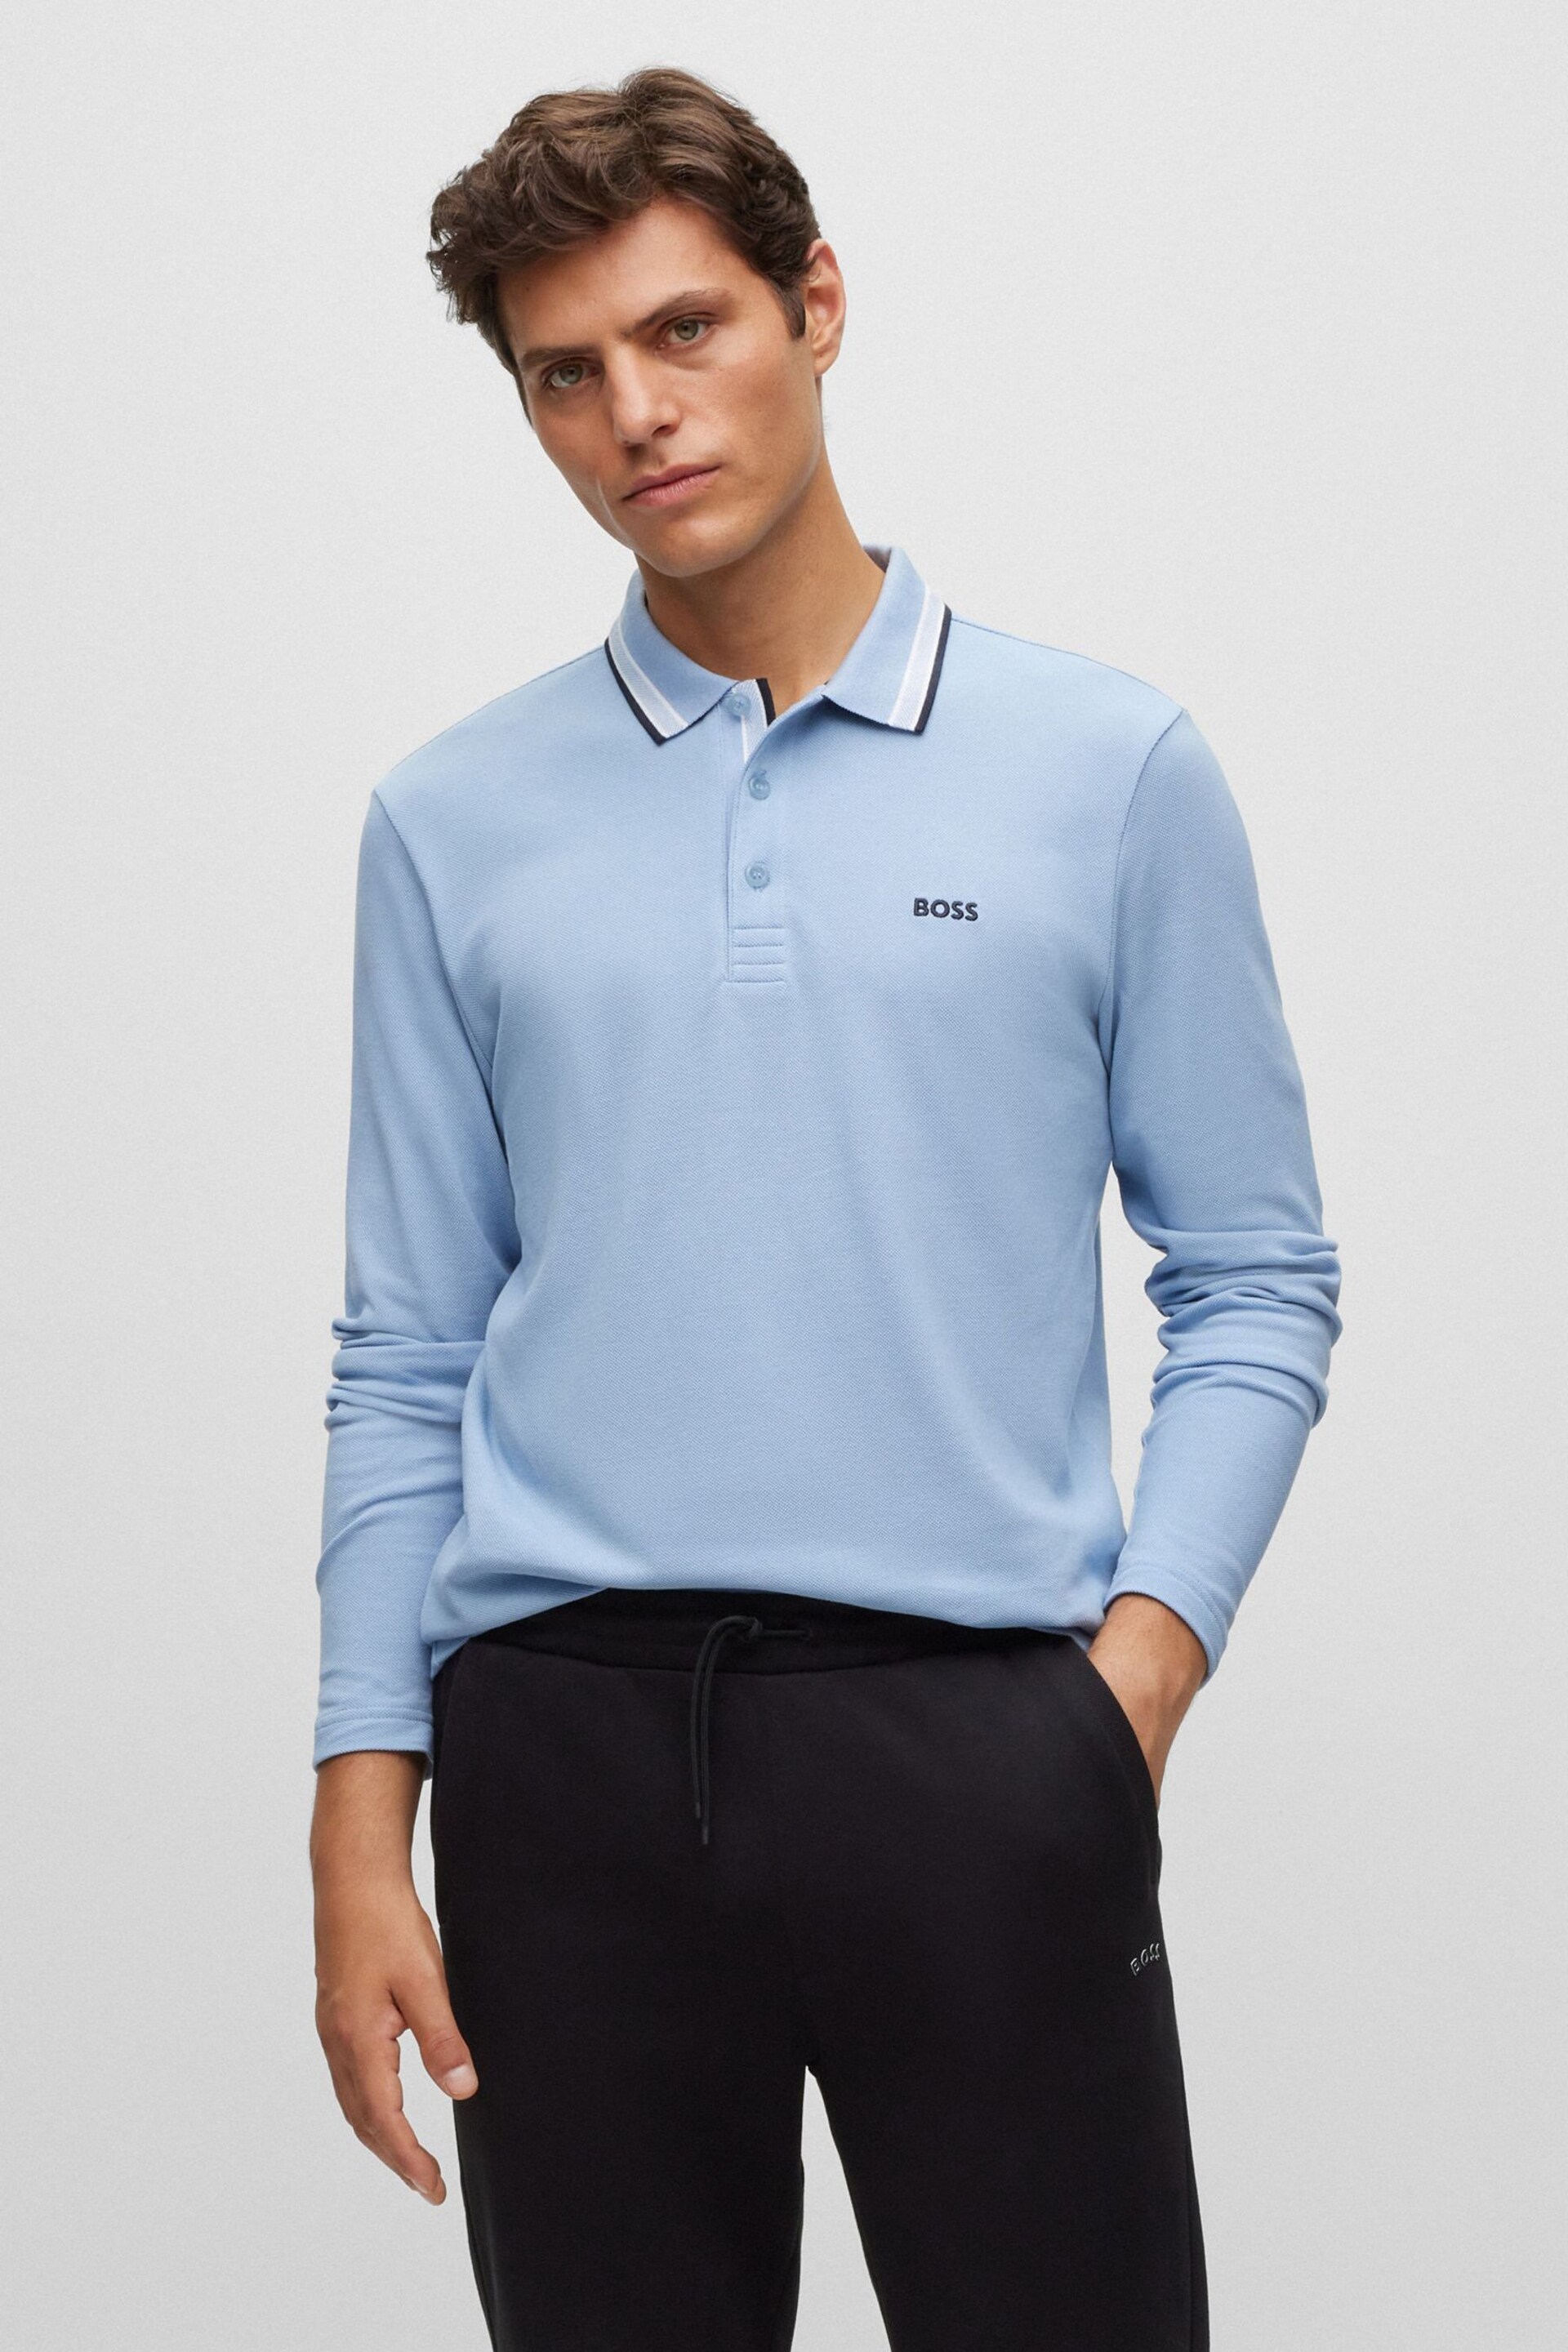 BOSS Light Blue Plisy Collar Detail Long Sleeve Polo Shirt - Image 1 of 5